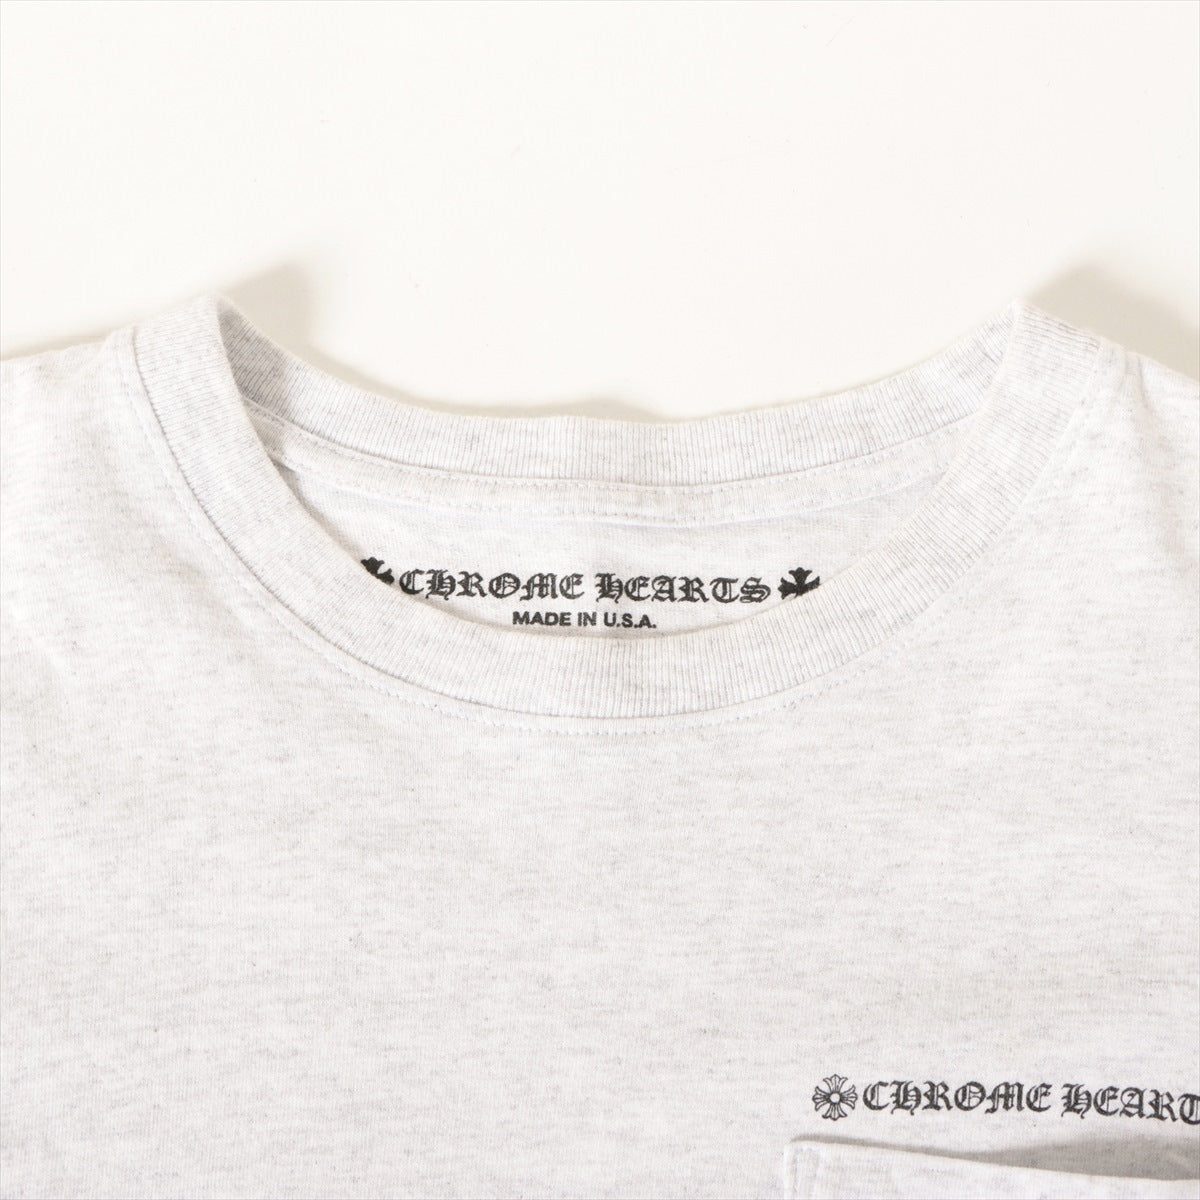 Chrome Hearts Matty Boy T-shirt Cotton & Polyester size M Grey PPO BRAIN